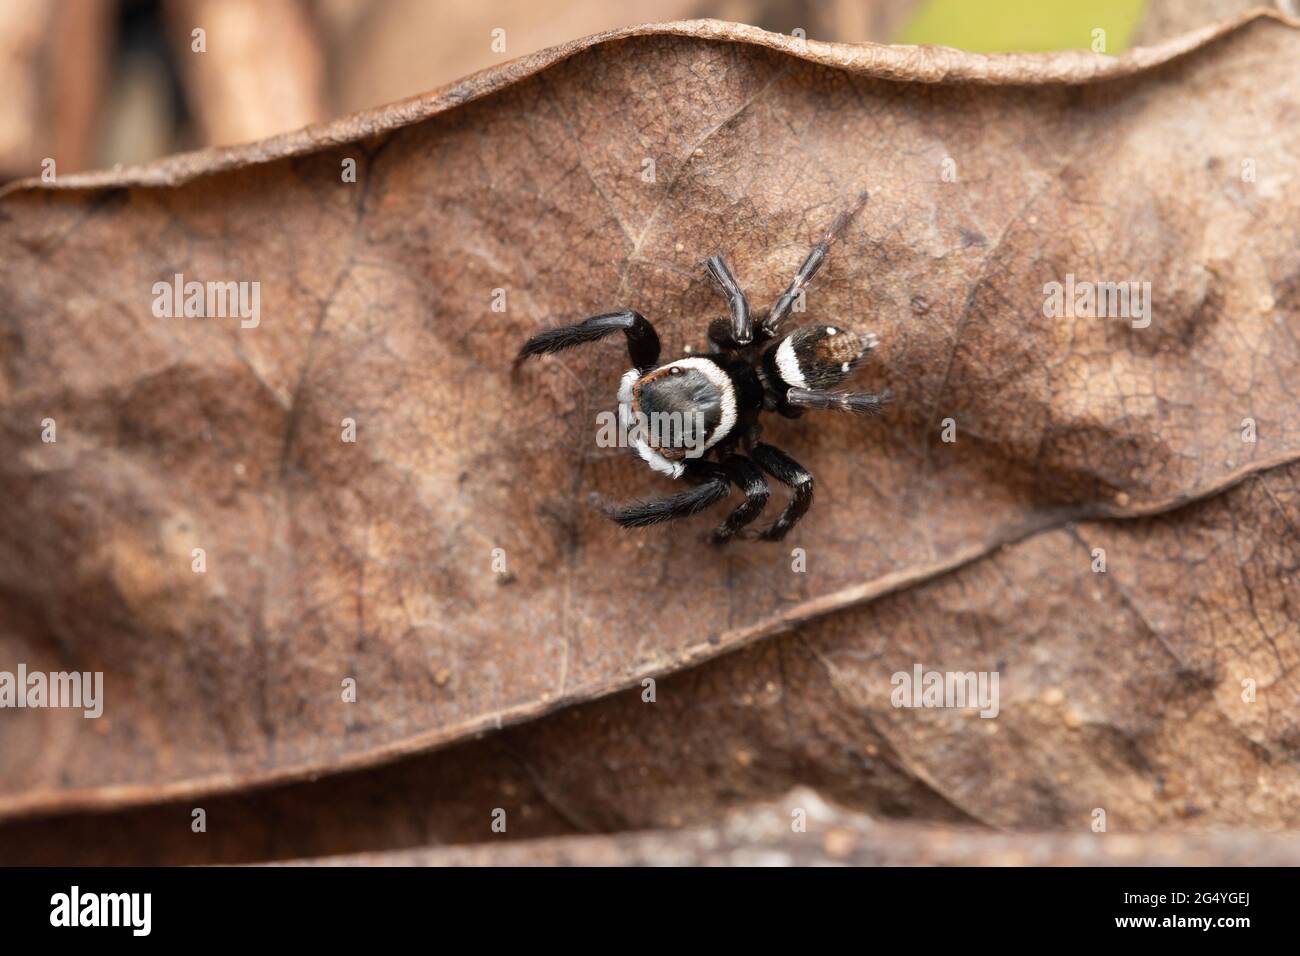 Dorsal von Adansonis springender Spinne, Hasarius adansoni, Satara, Maharashtra, Indien Stockfoto